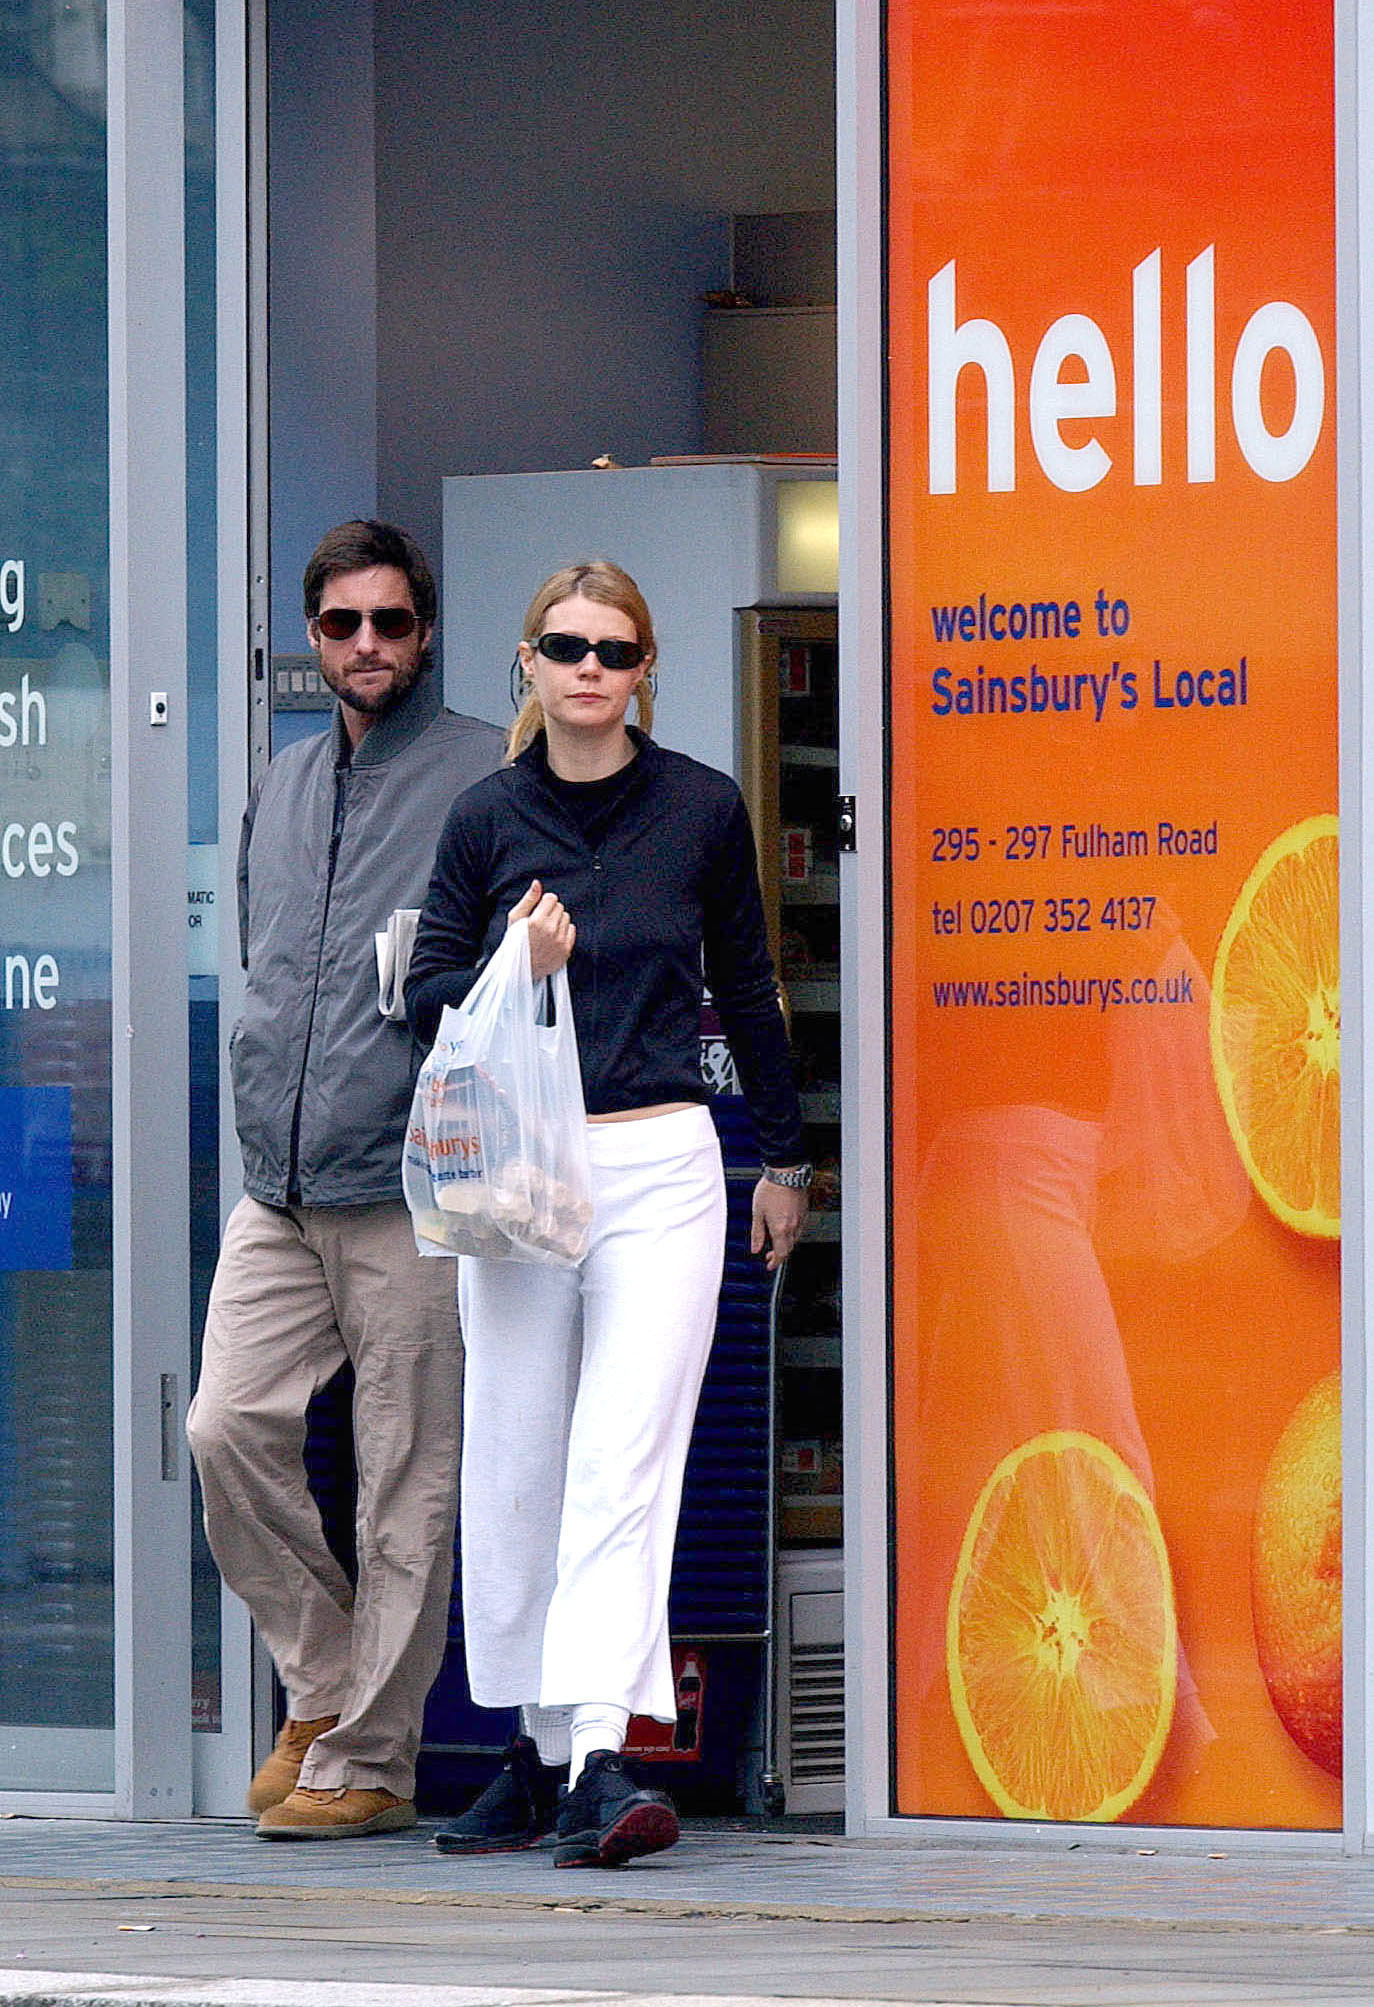 Luke Wilson and Gwyneth Paltrow walking together